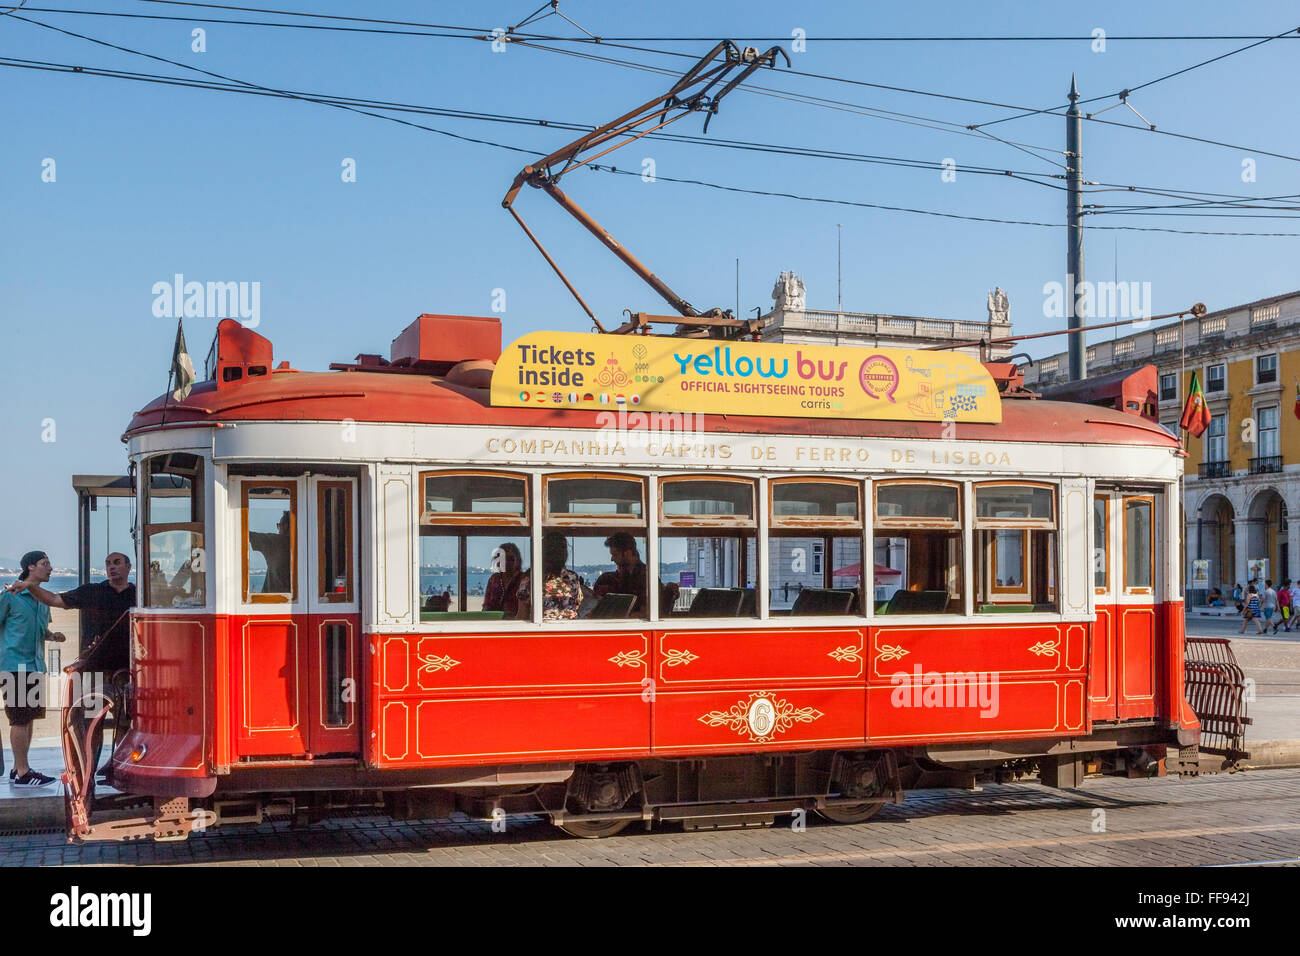 Portugal, Lisbon, Pombaline Downton, Lisbon tram at Praca do Comercio, Plaza of Commerce Stock Photo